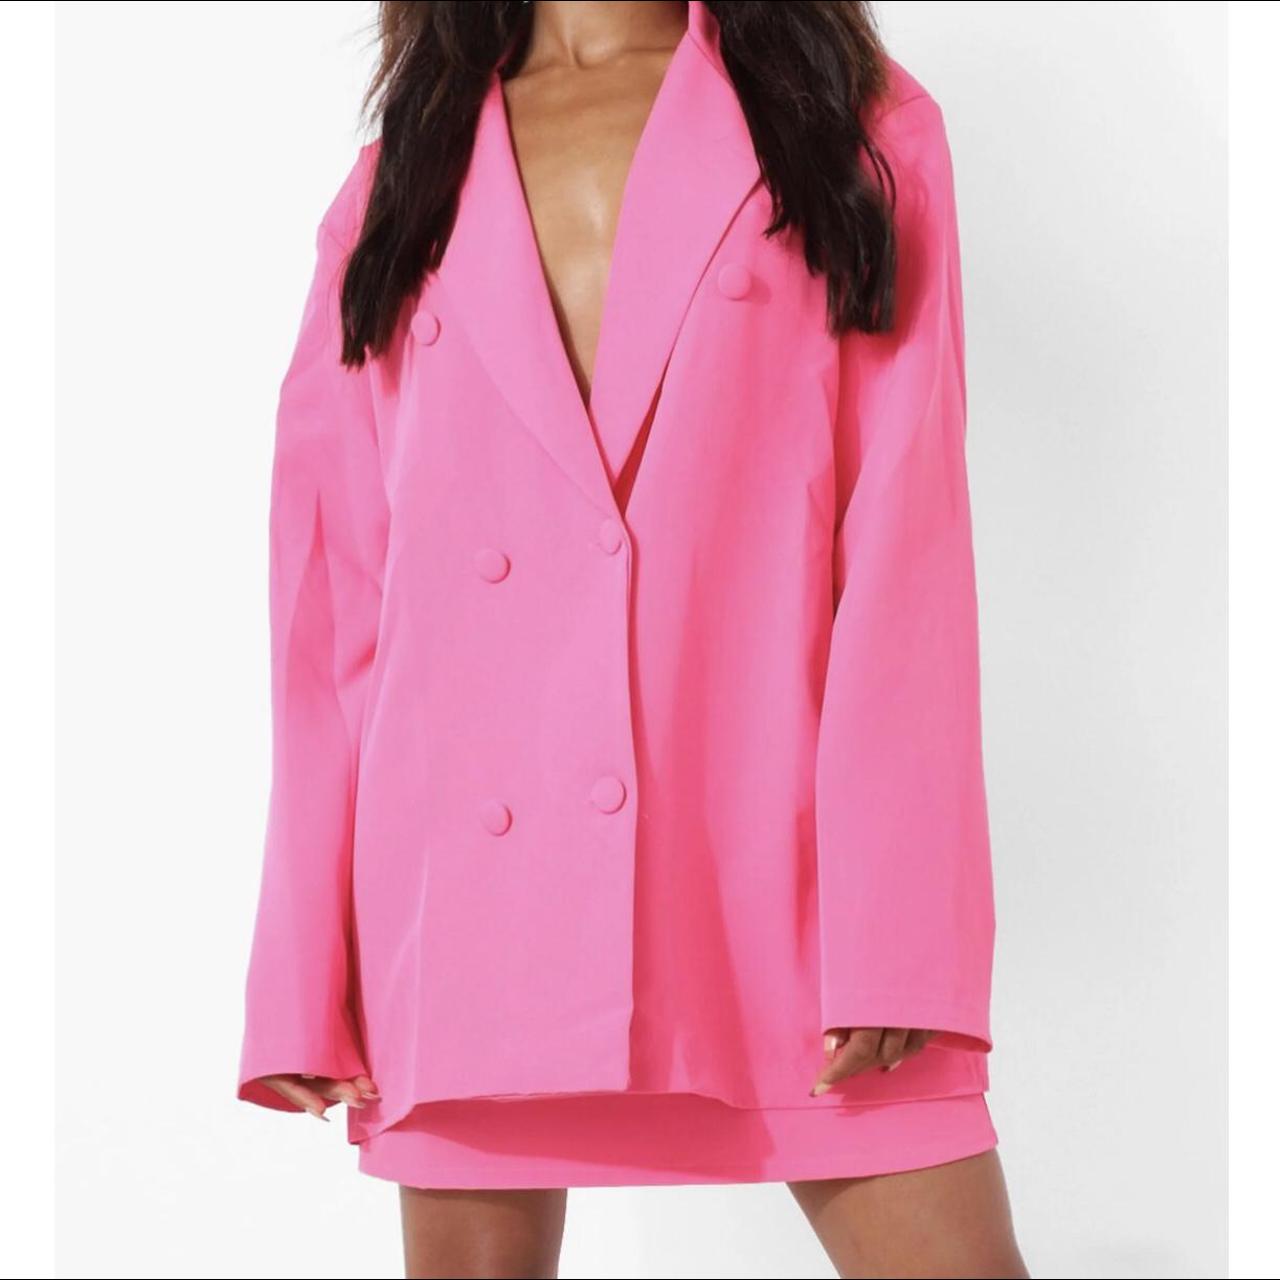 Product Image 1 - Ladies boohoo neon pink blazer